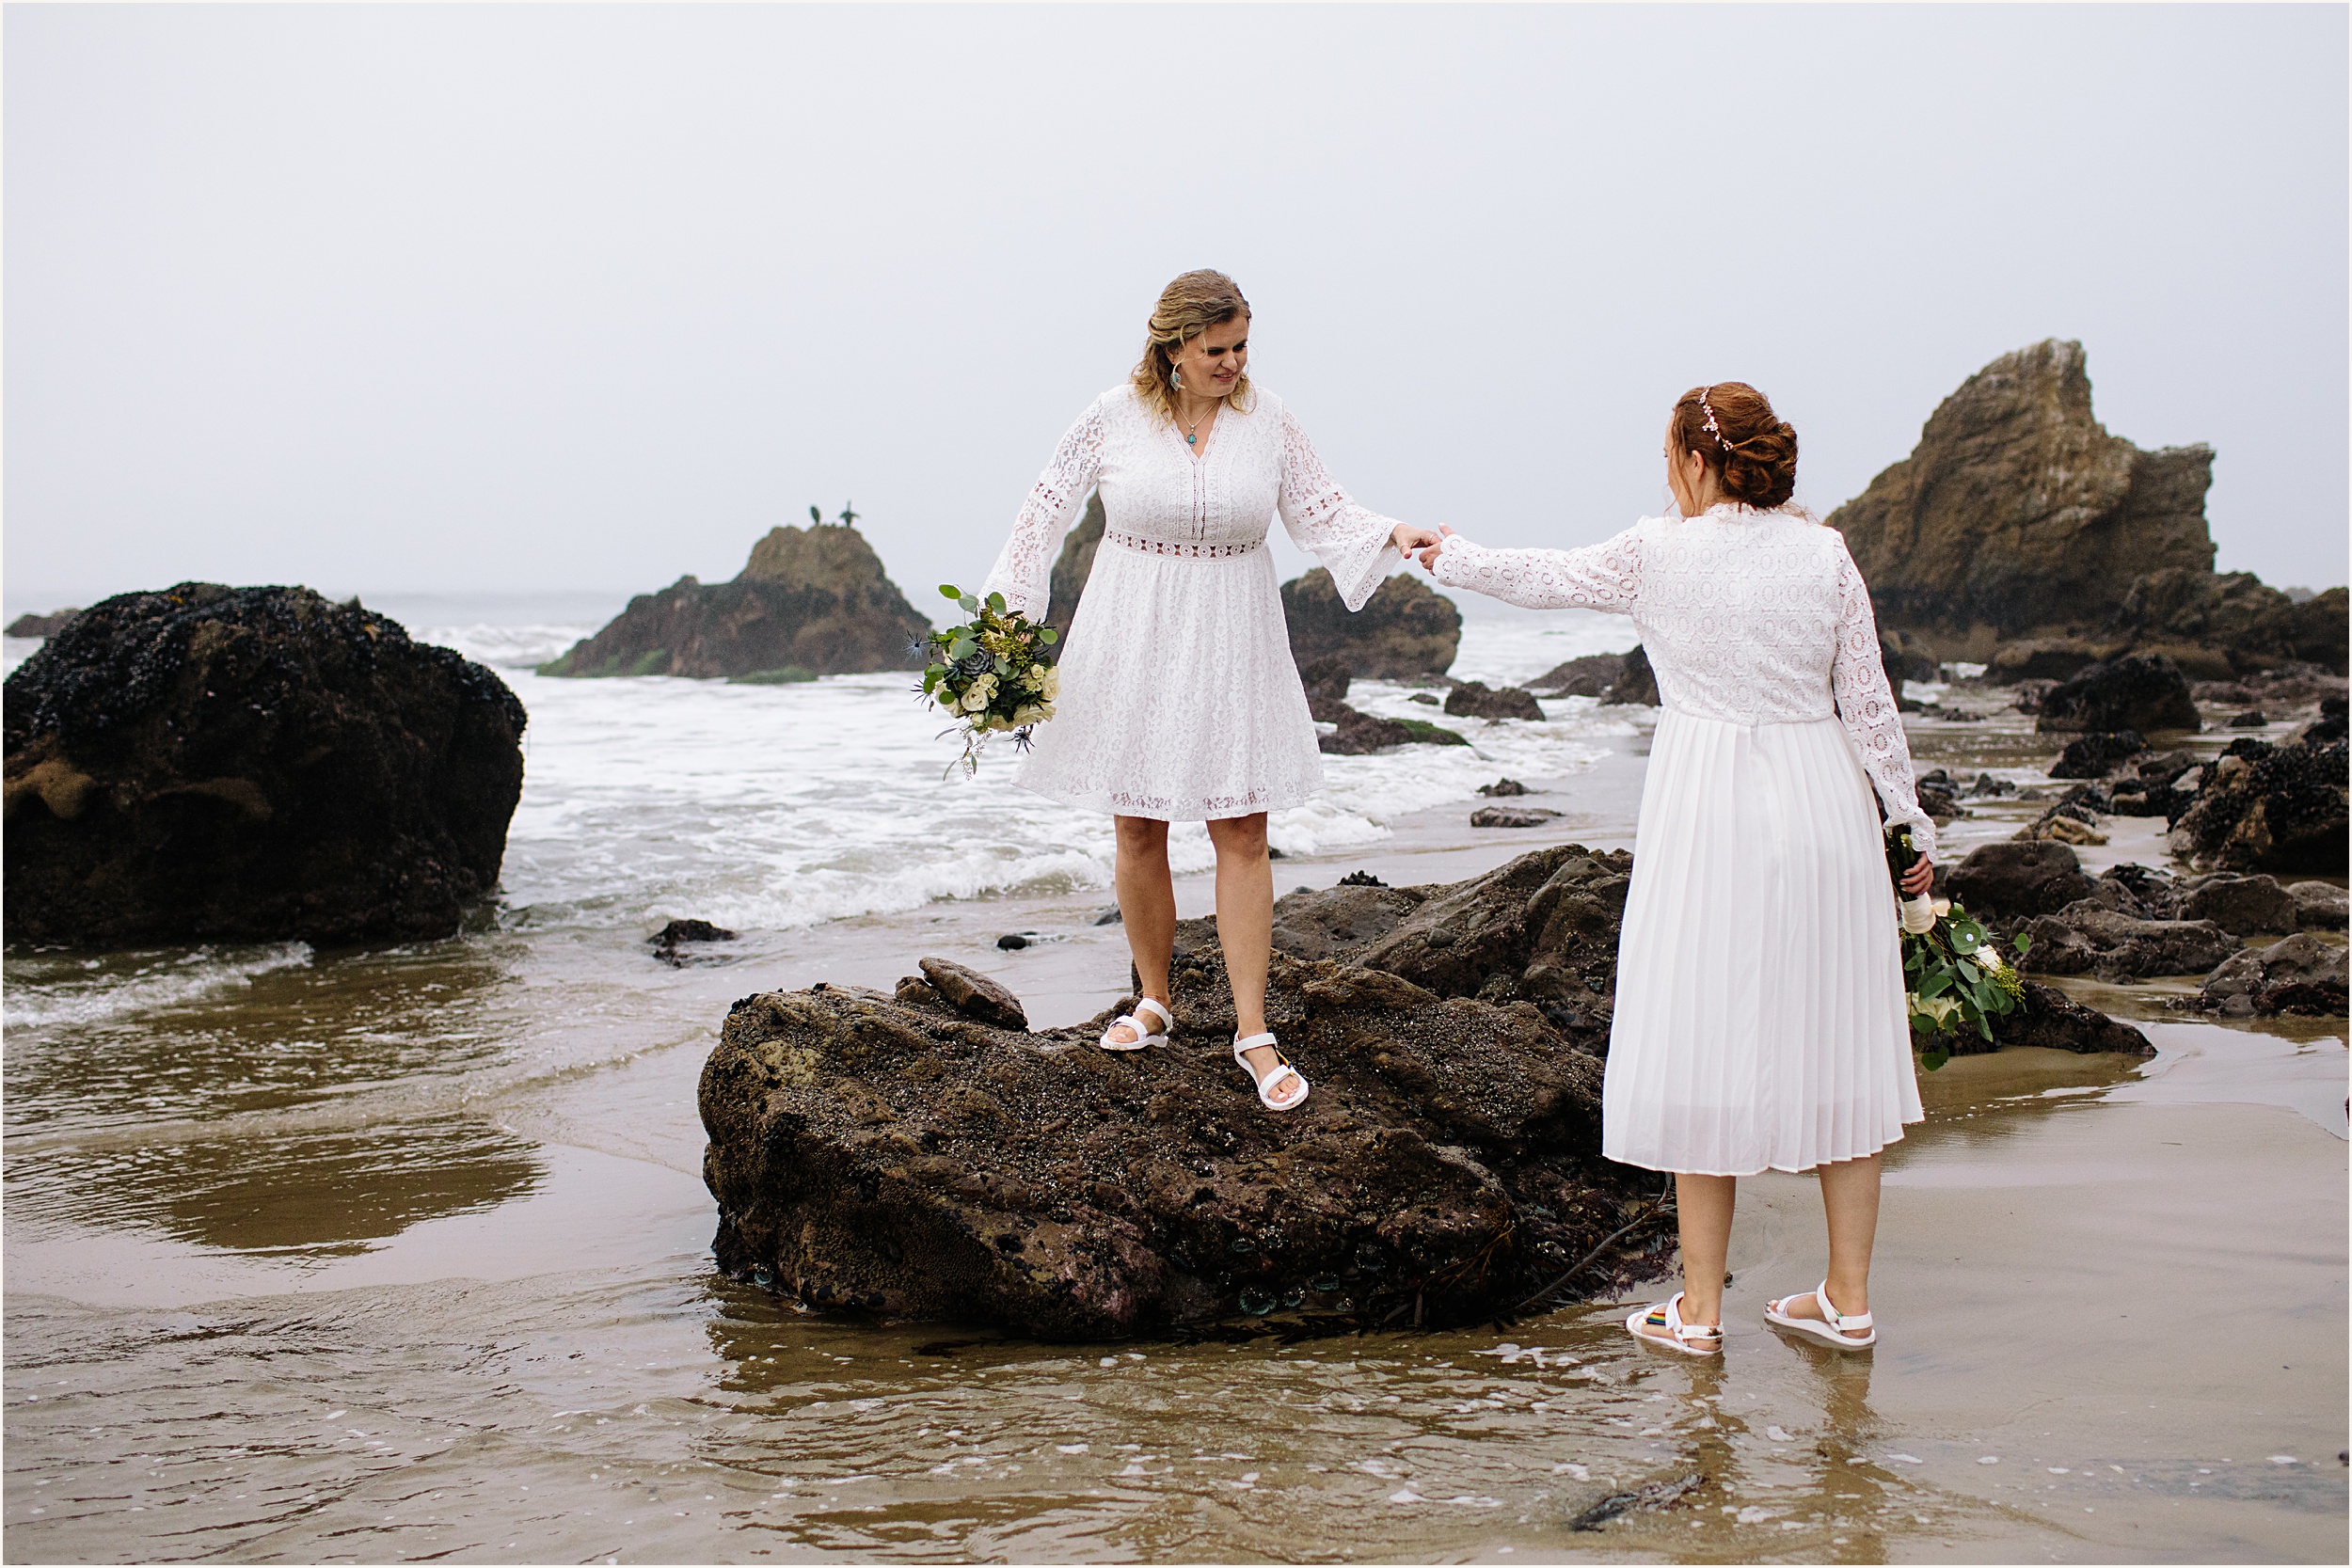 Photo of brides in stunning white lace elopement dresses at El Matador beach climbing rocks